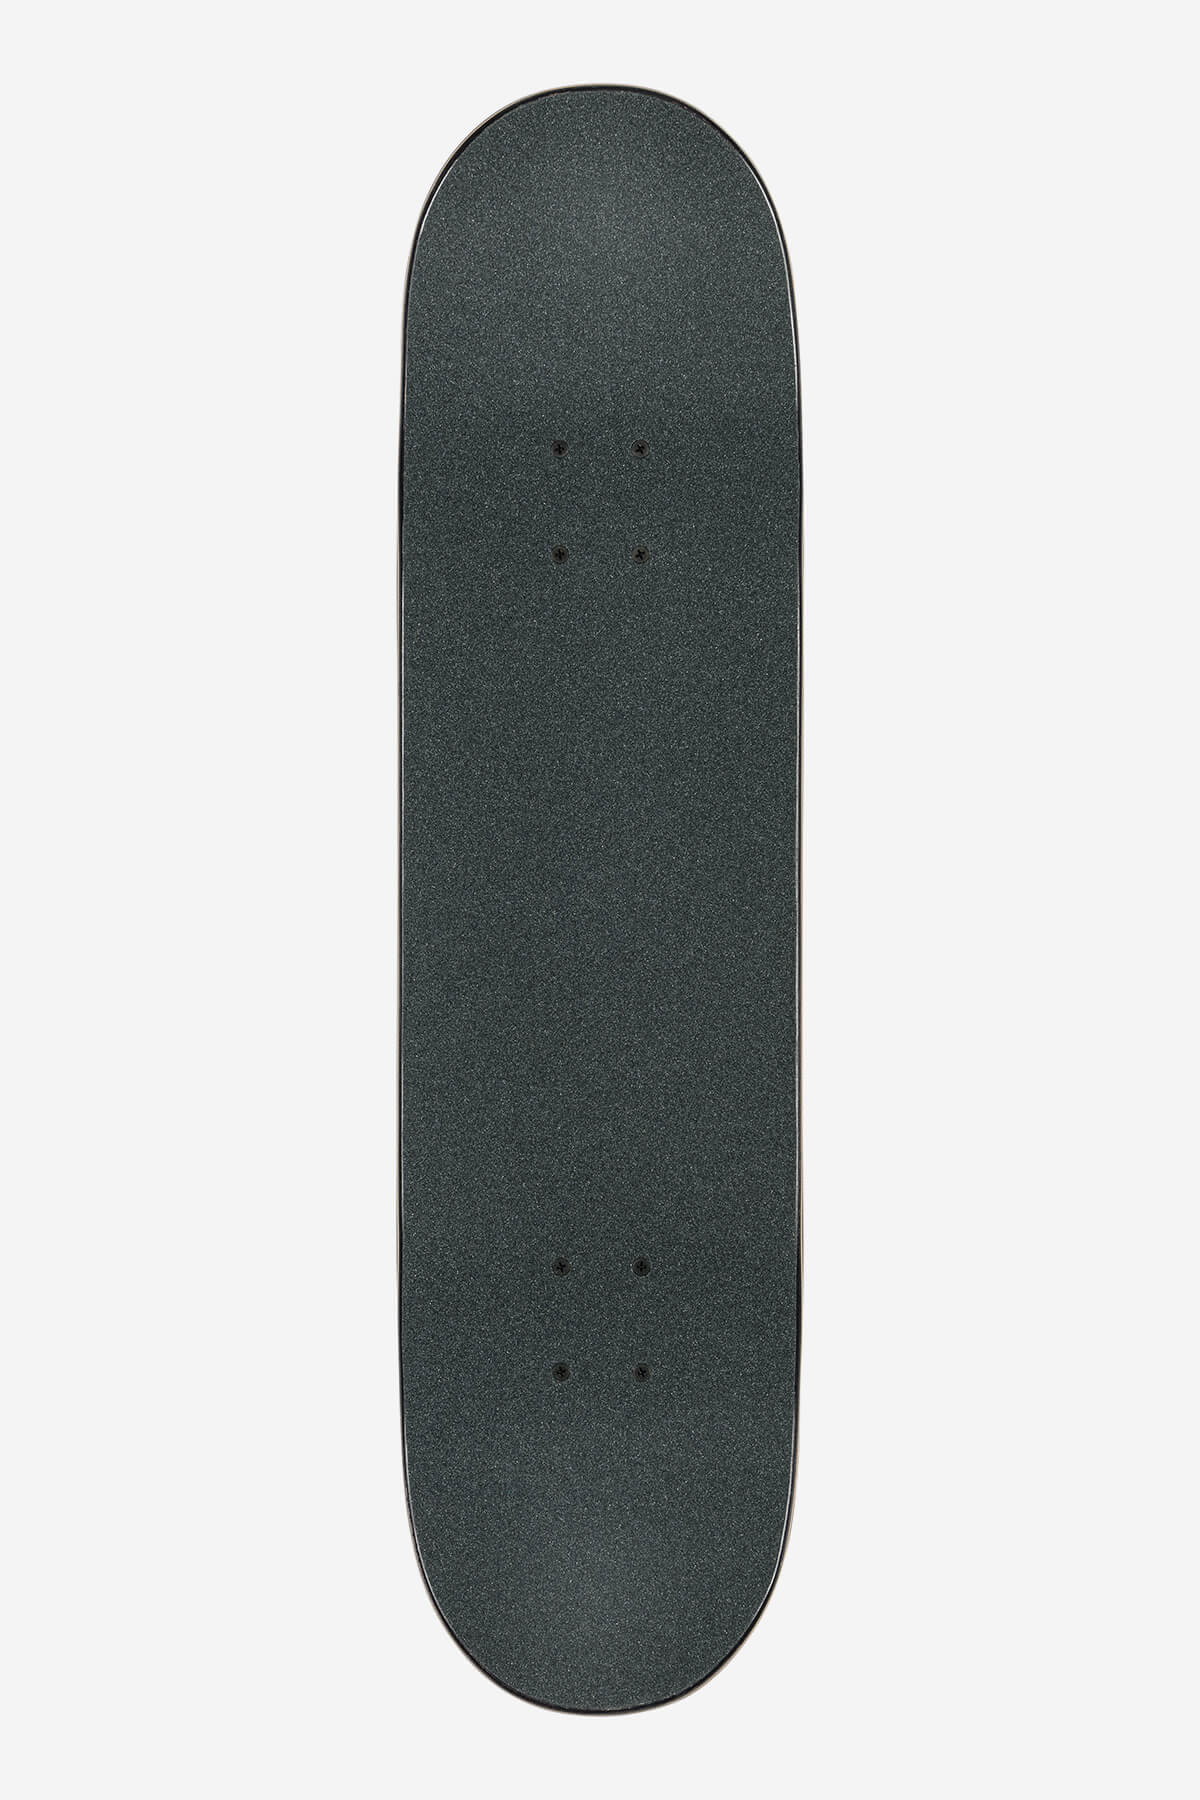 g1 argo black camo 8.125" complete skateboard